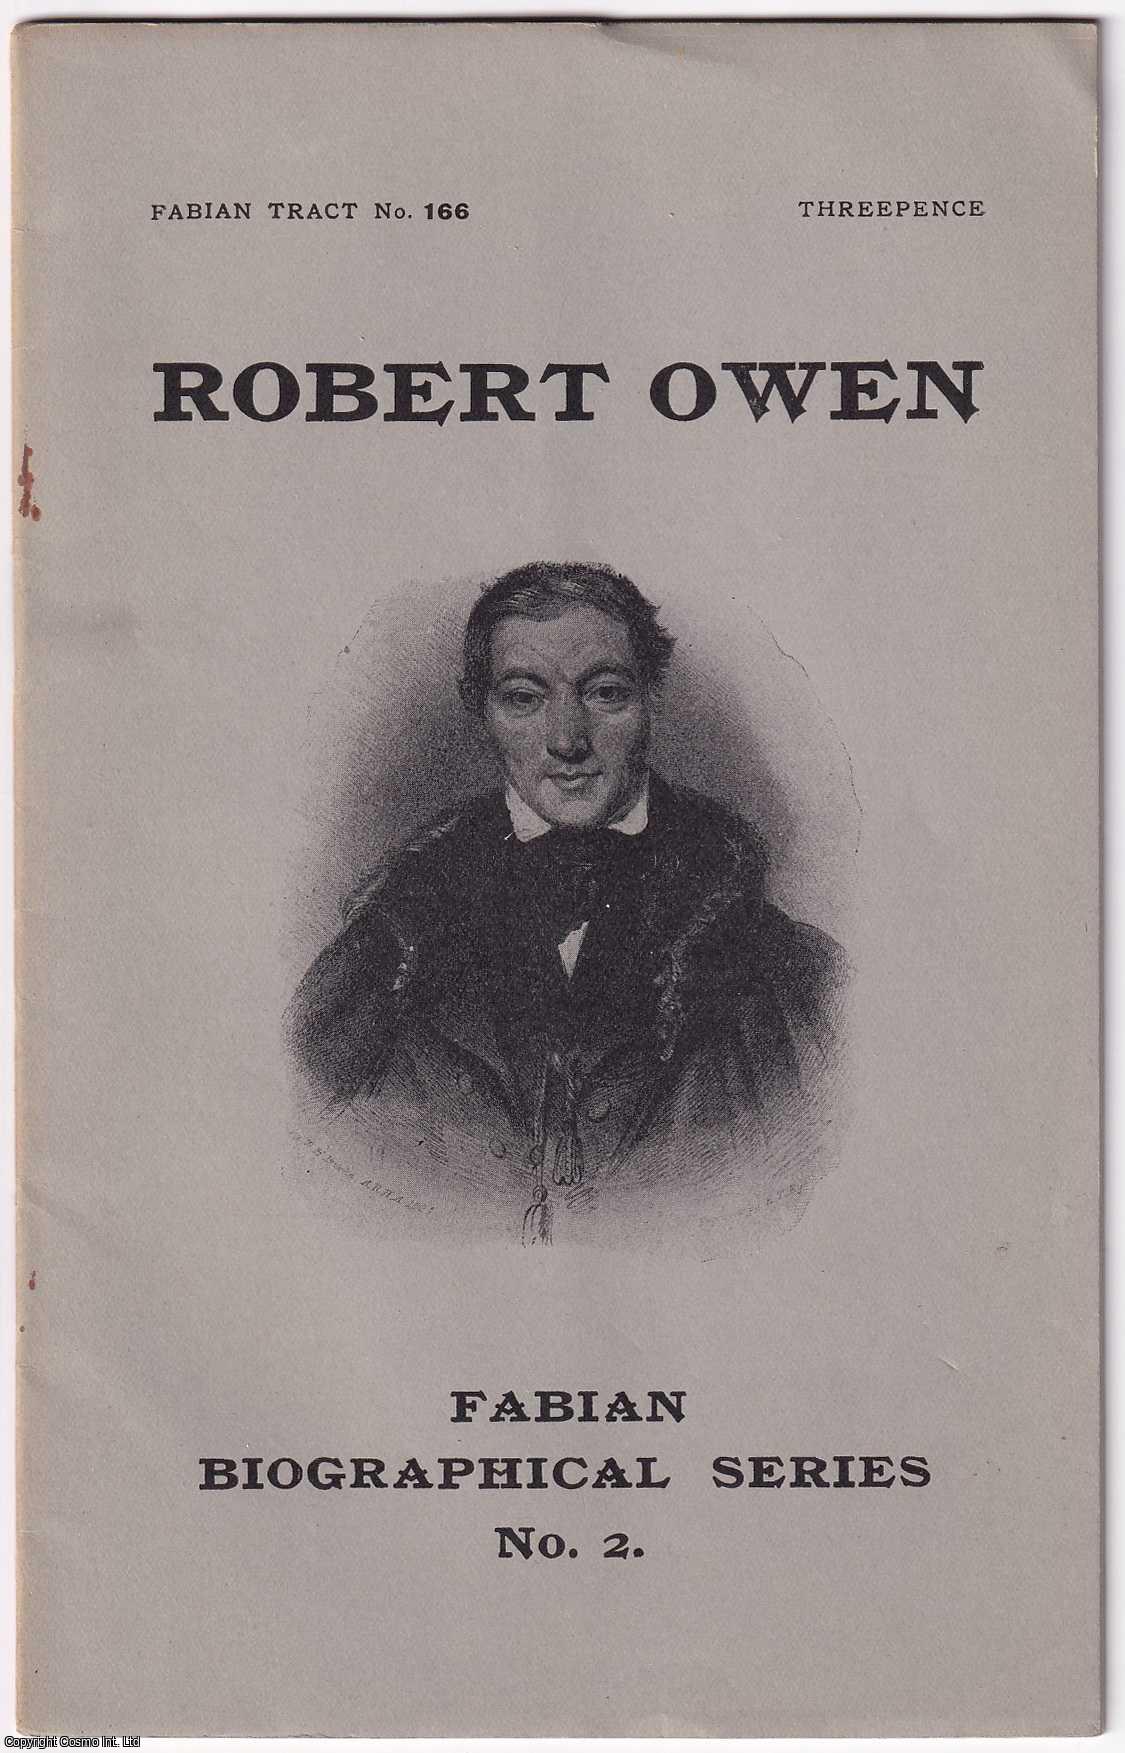 B.L. Hutchins - Robert Owen, Social Reformer. Fabian Biographical Series No. 2. Fabian Tract No.166. Published by Fabian Society 1928.